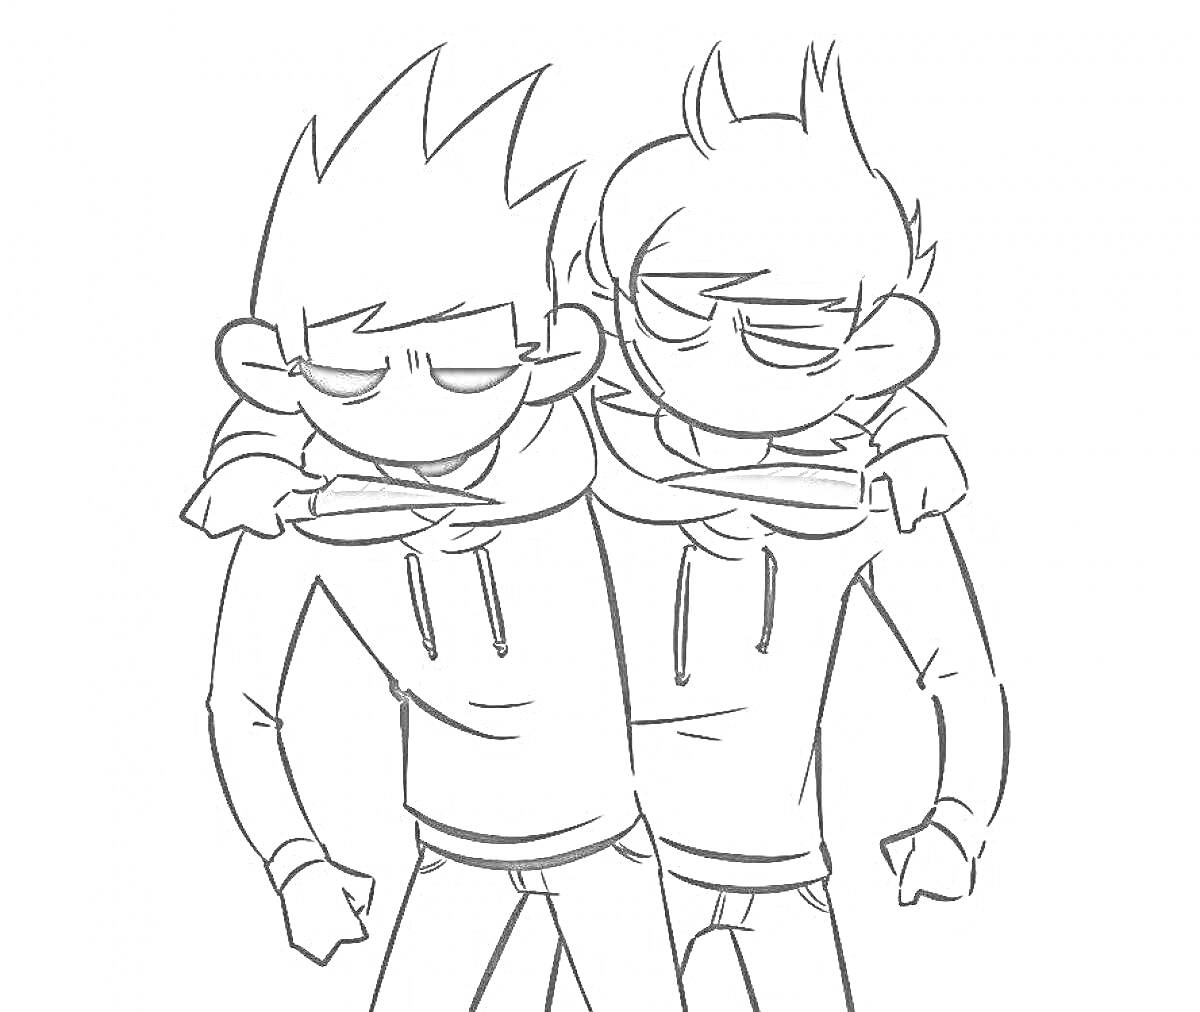 Раскраска Два персонажа с поднятыми руками в толстовках стоят вместе, обнявшись за плечи.